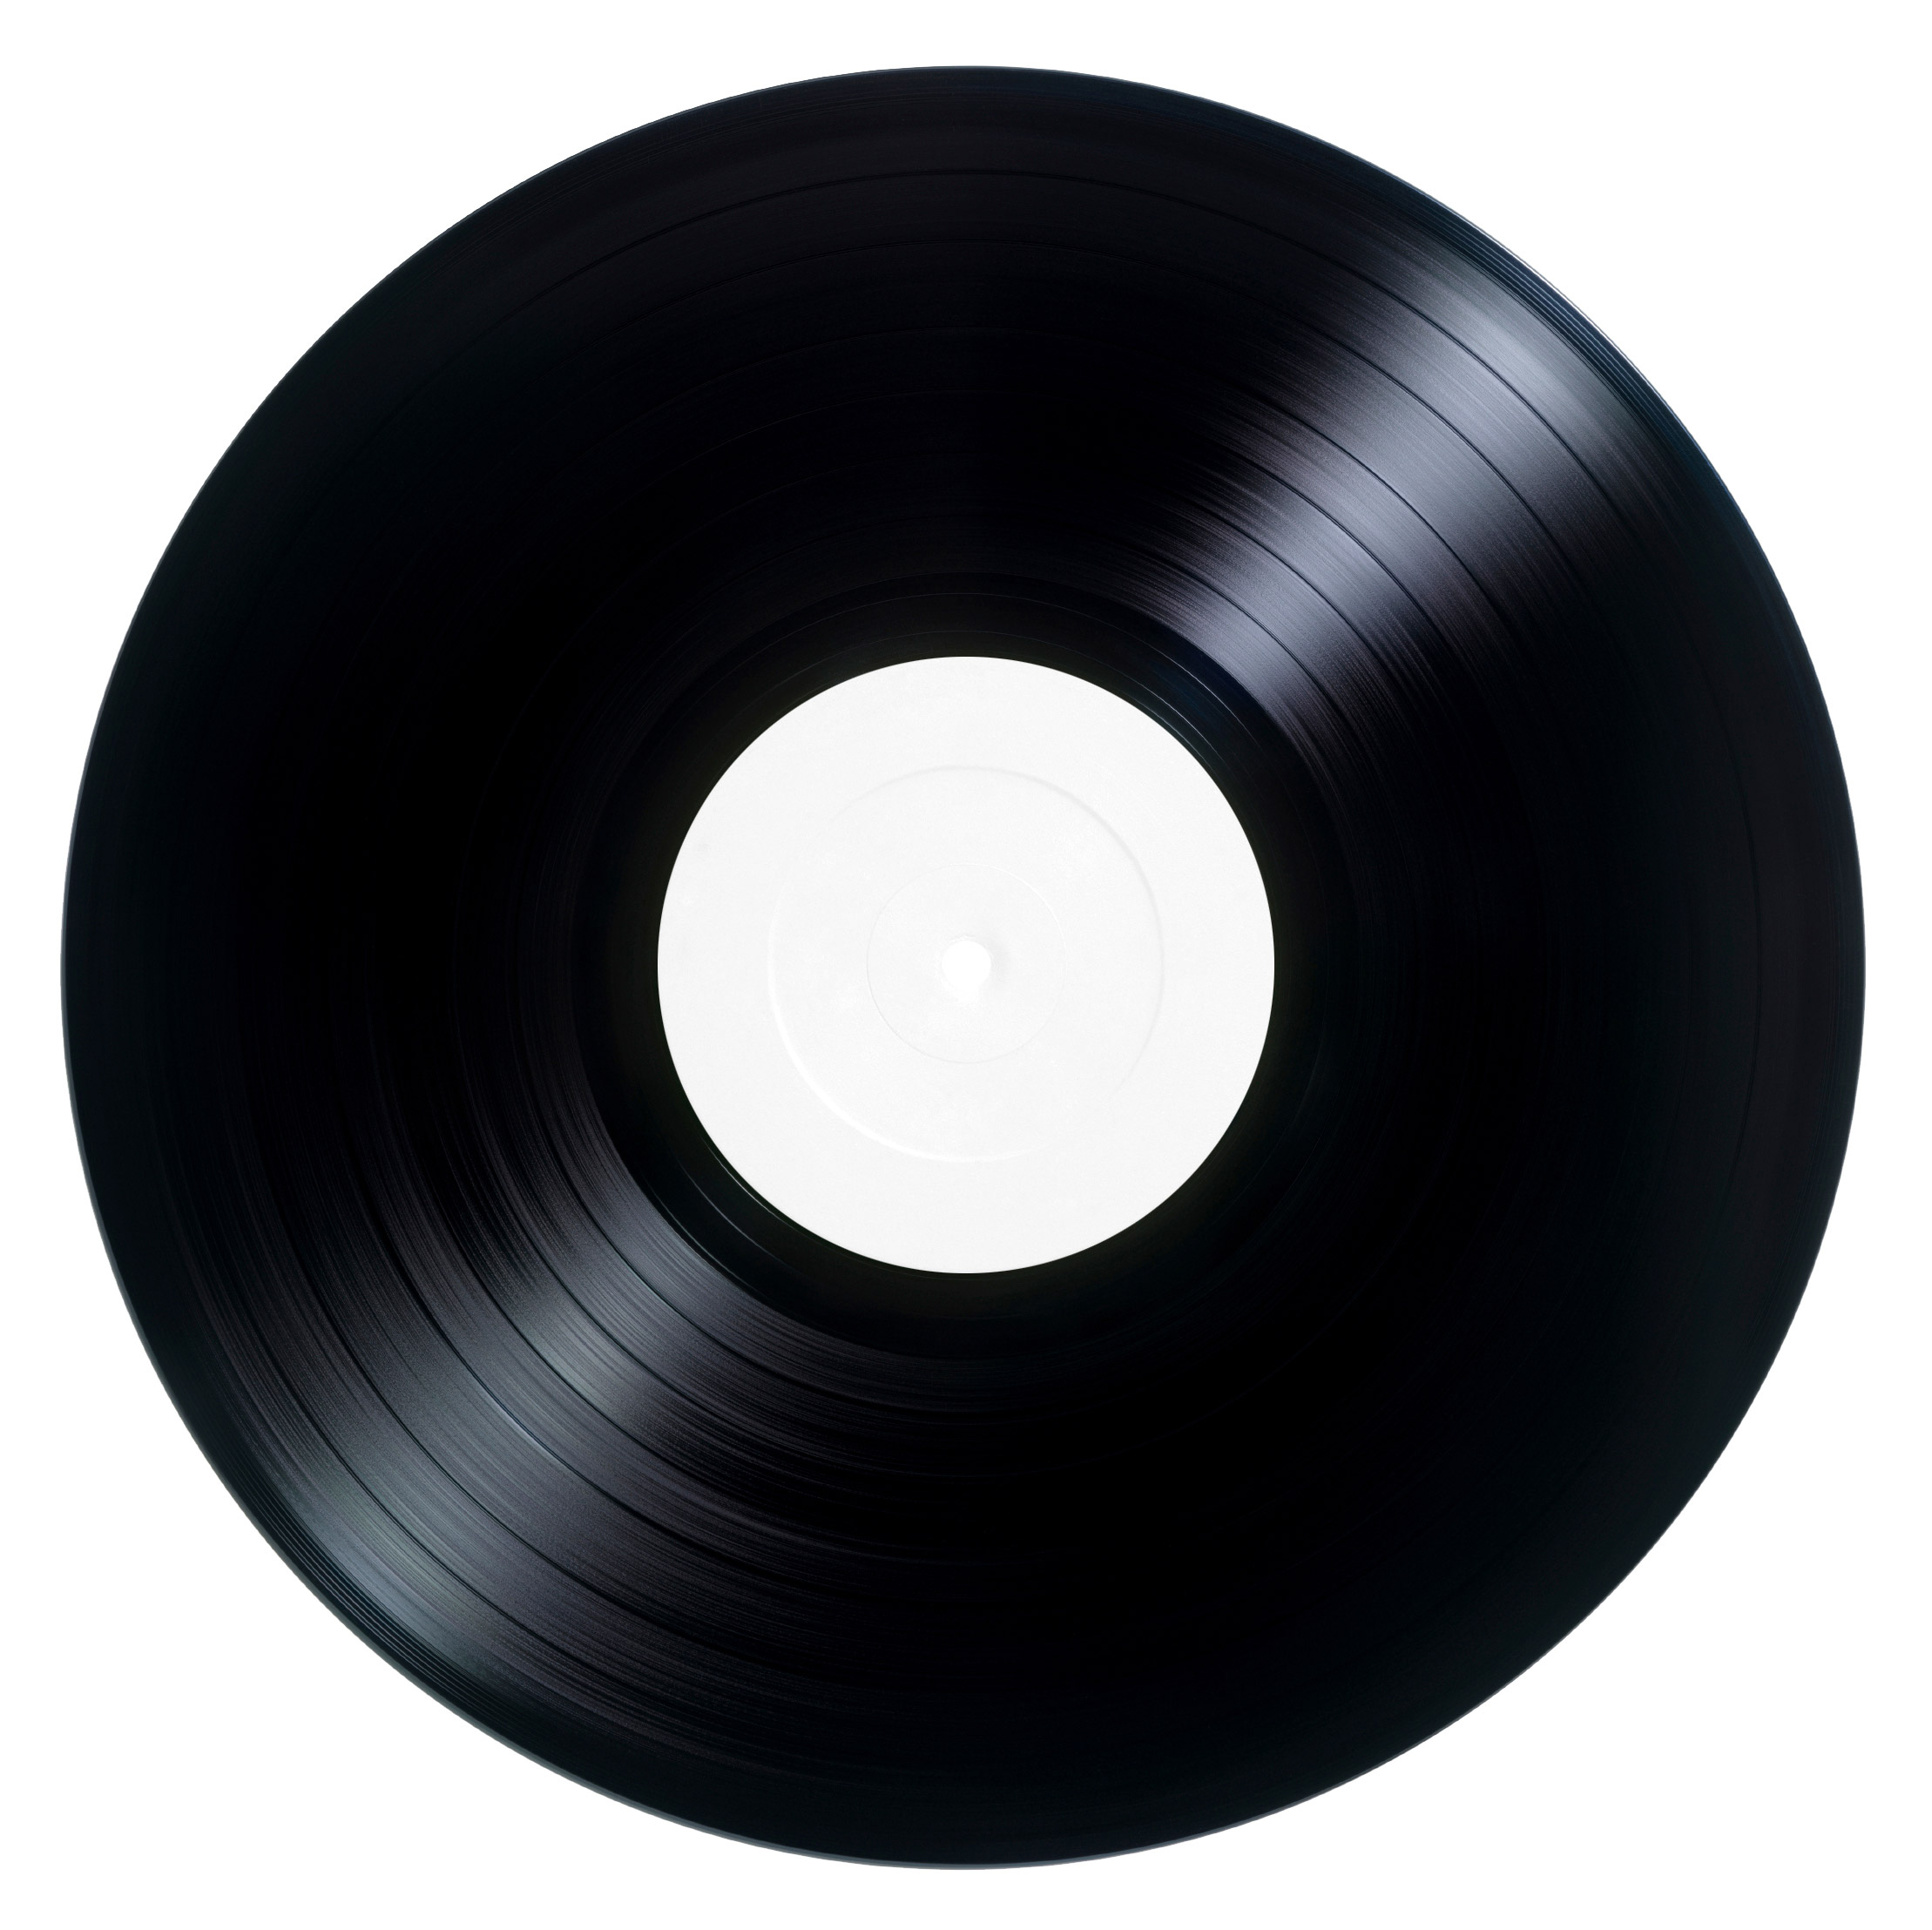 Vinyl Master-disc Being Cut!